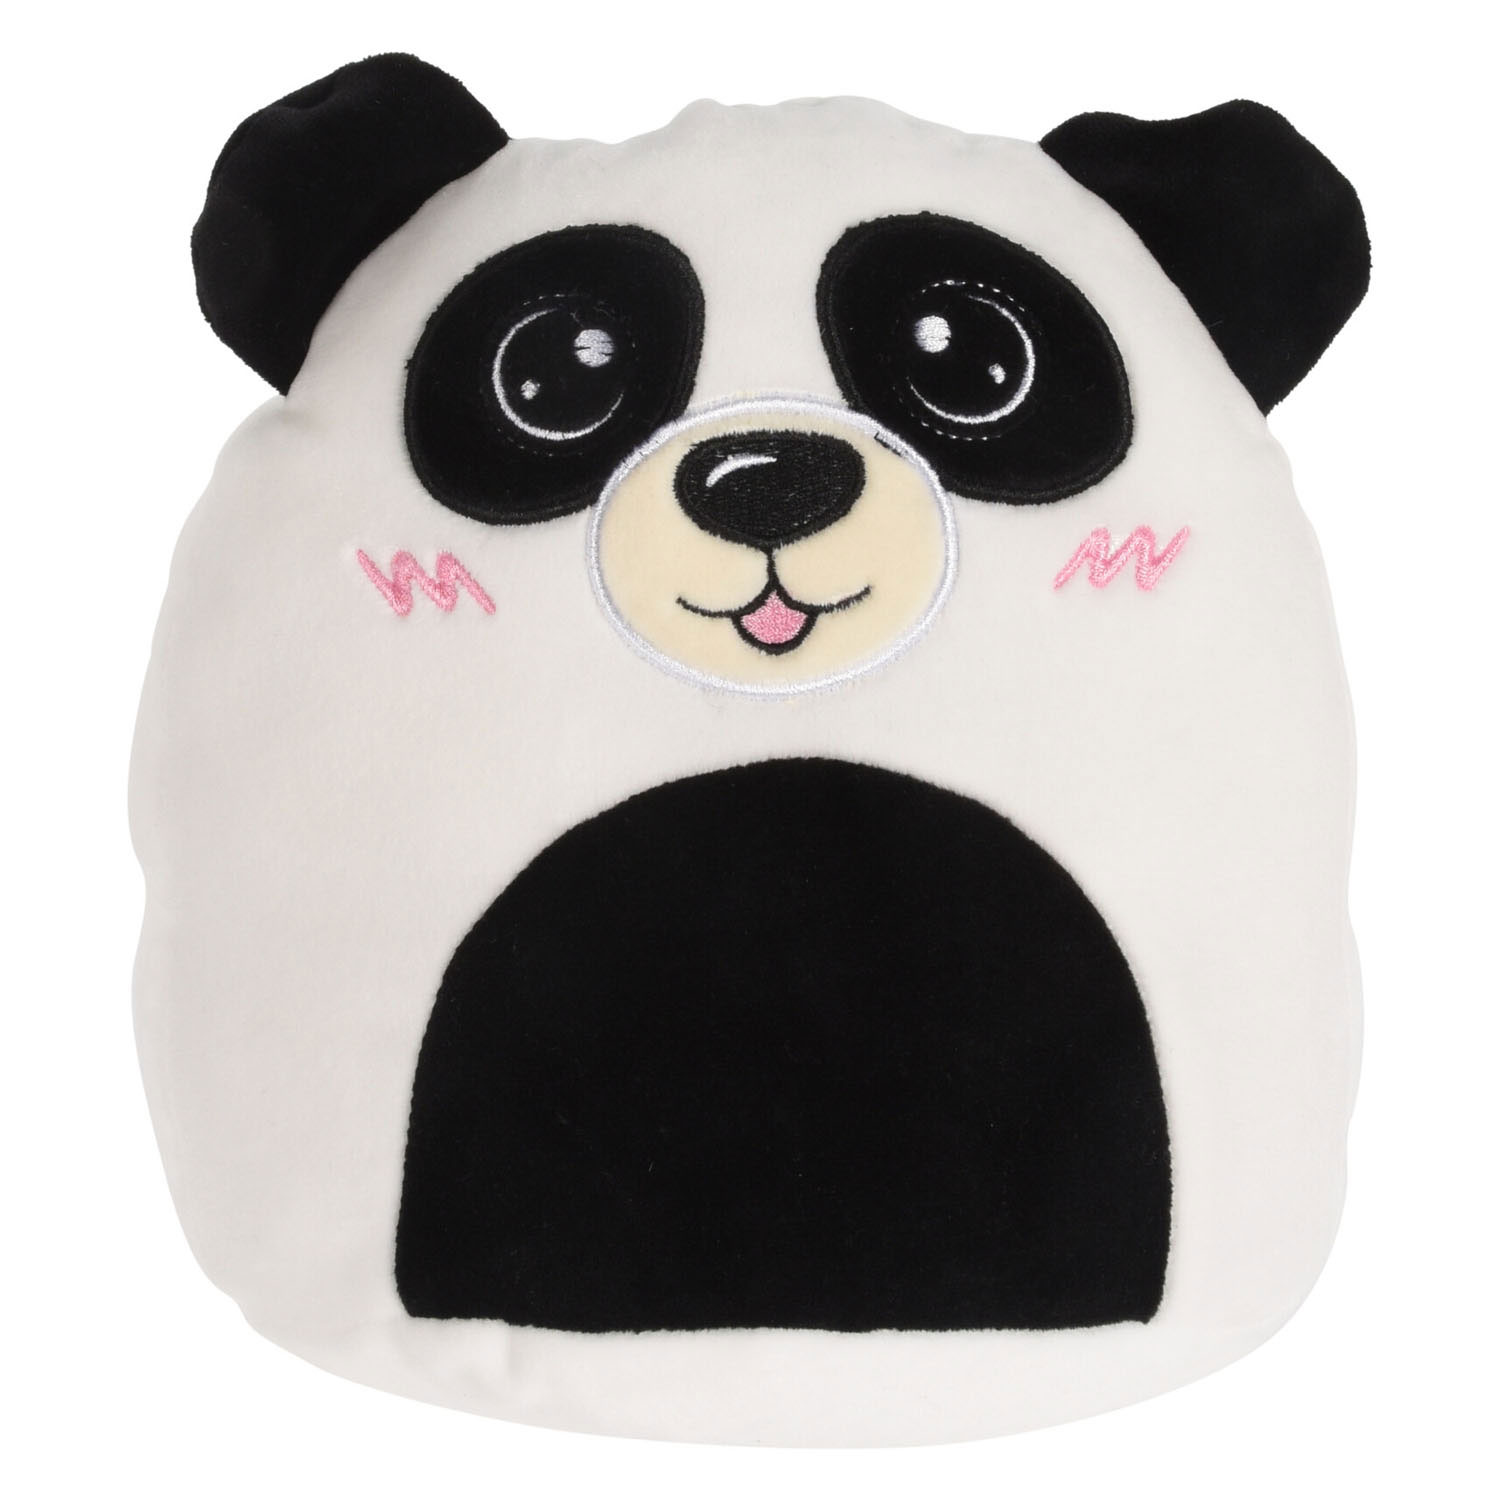 Acheter Peluche Panda en forme de boule, 40 cm en ligne?